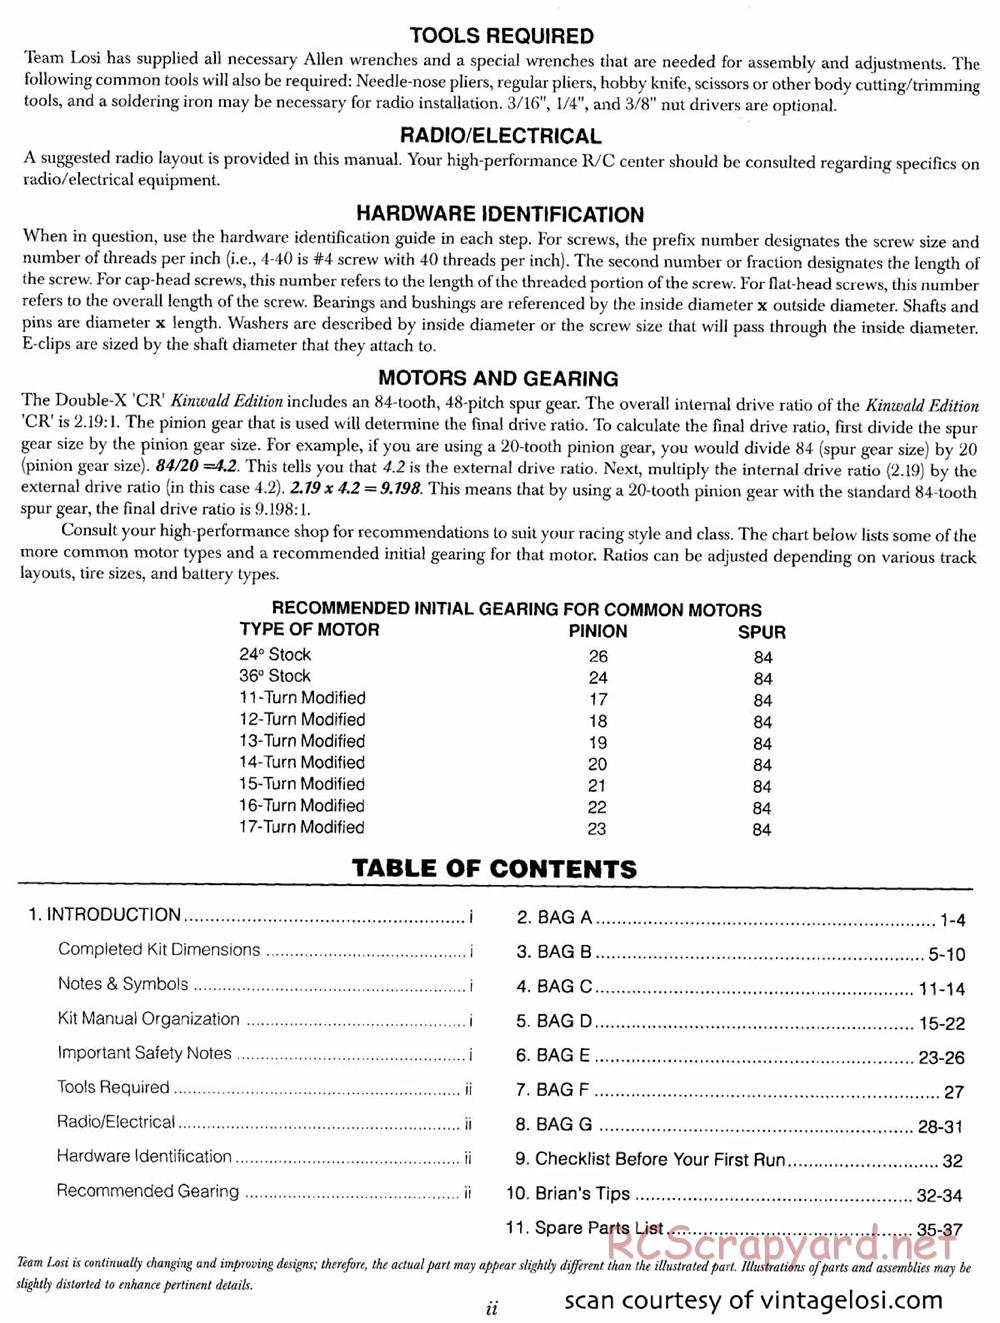 Team Losi - XX CR Kinwald Edition - Manual - Page 3